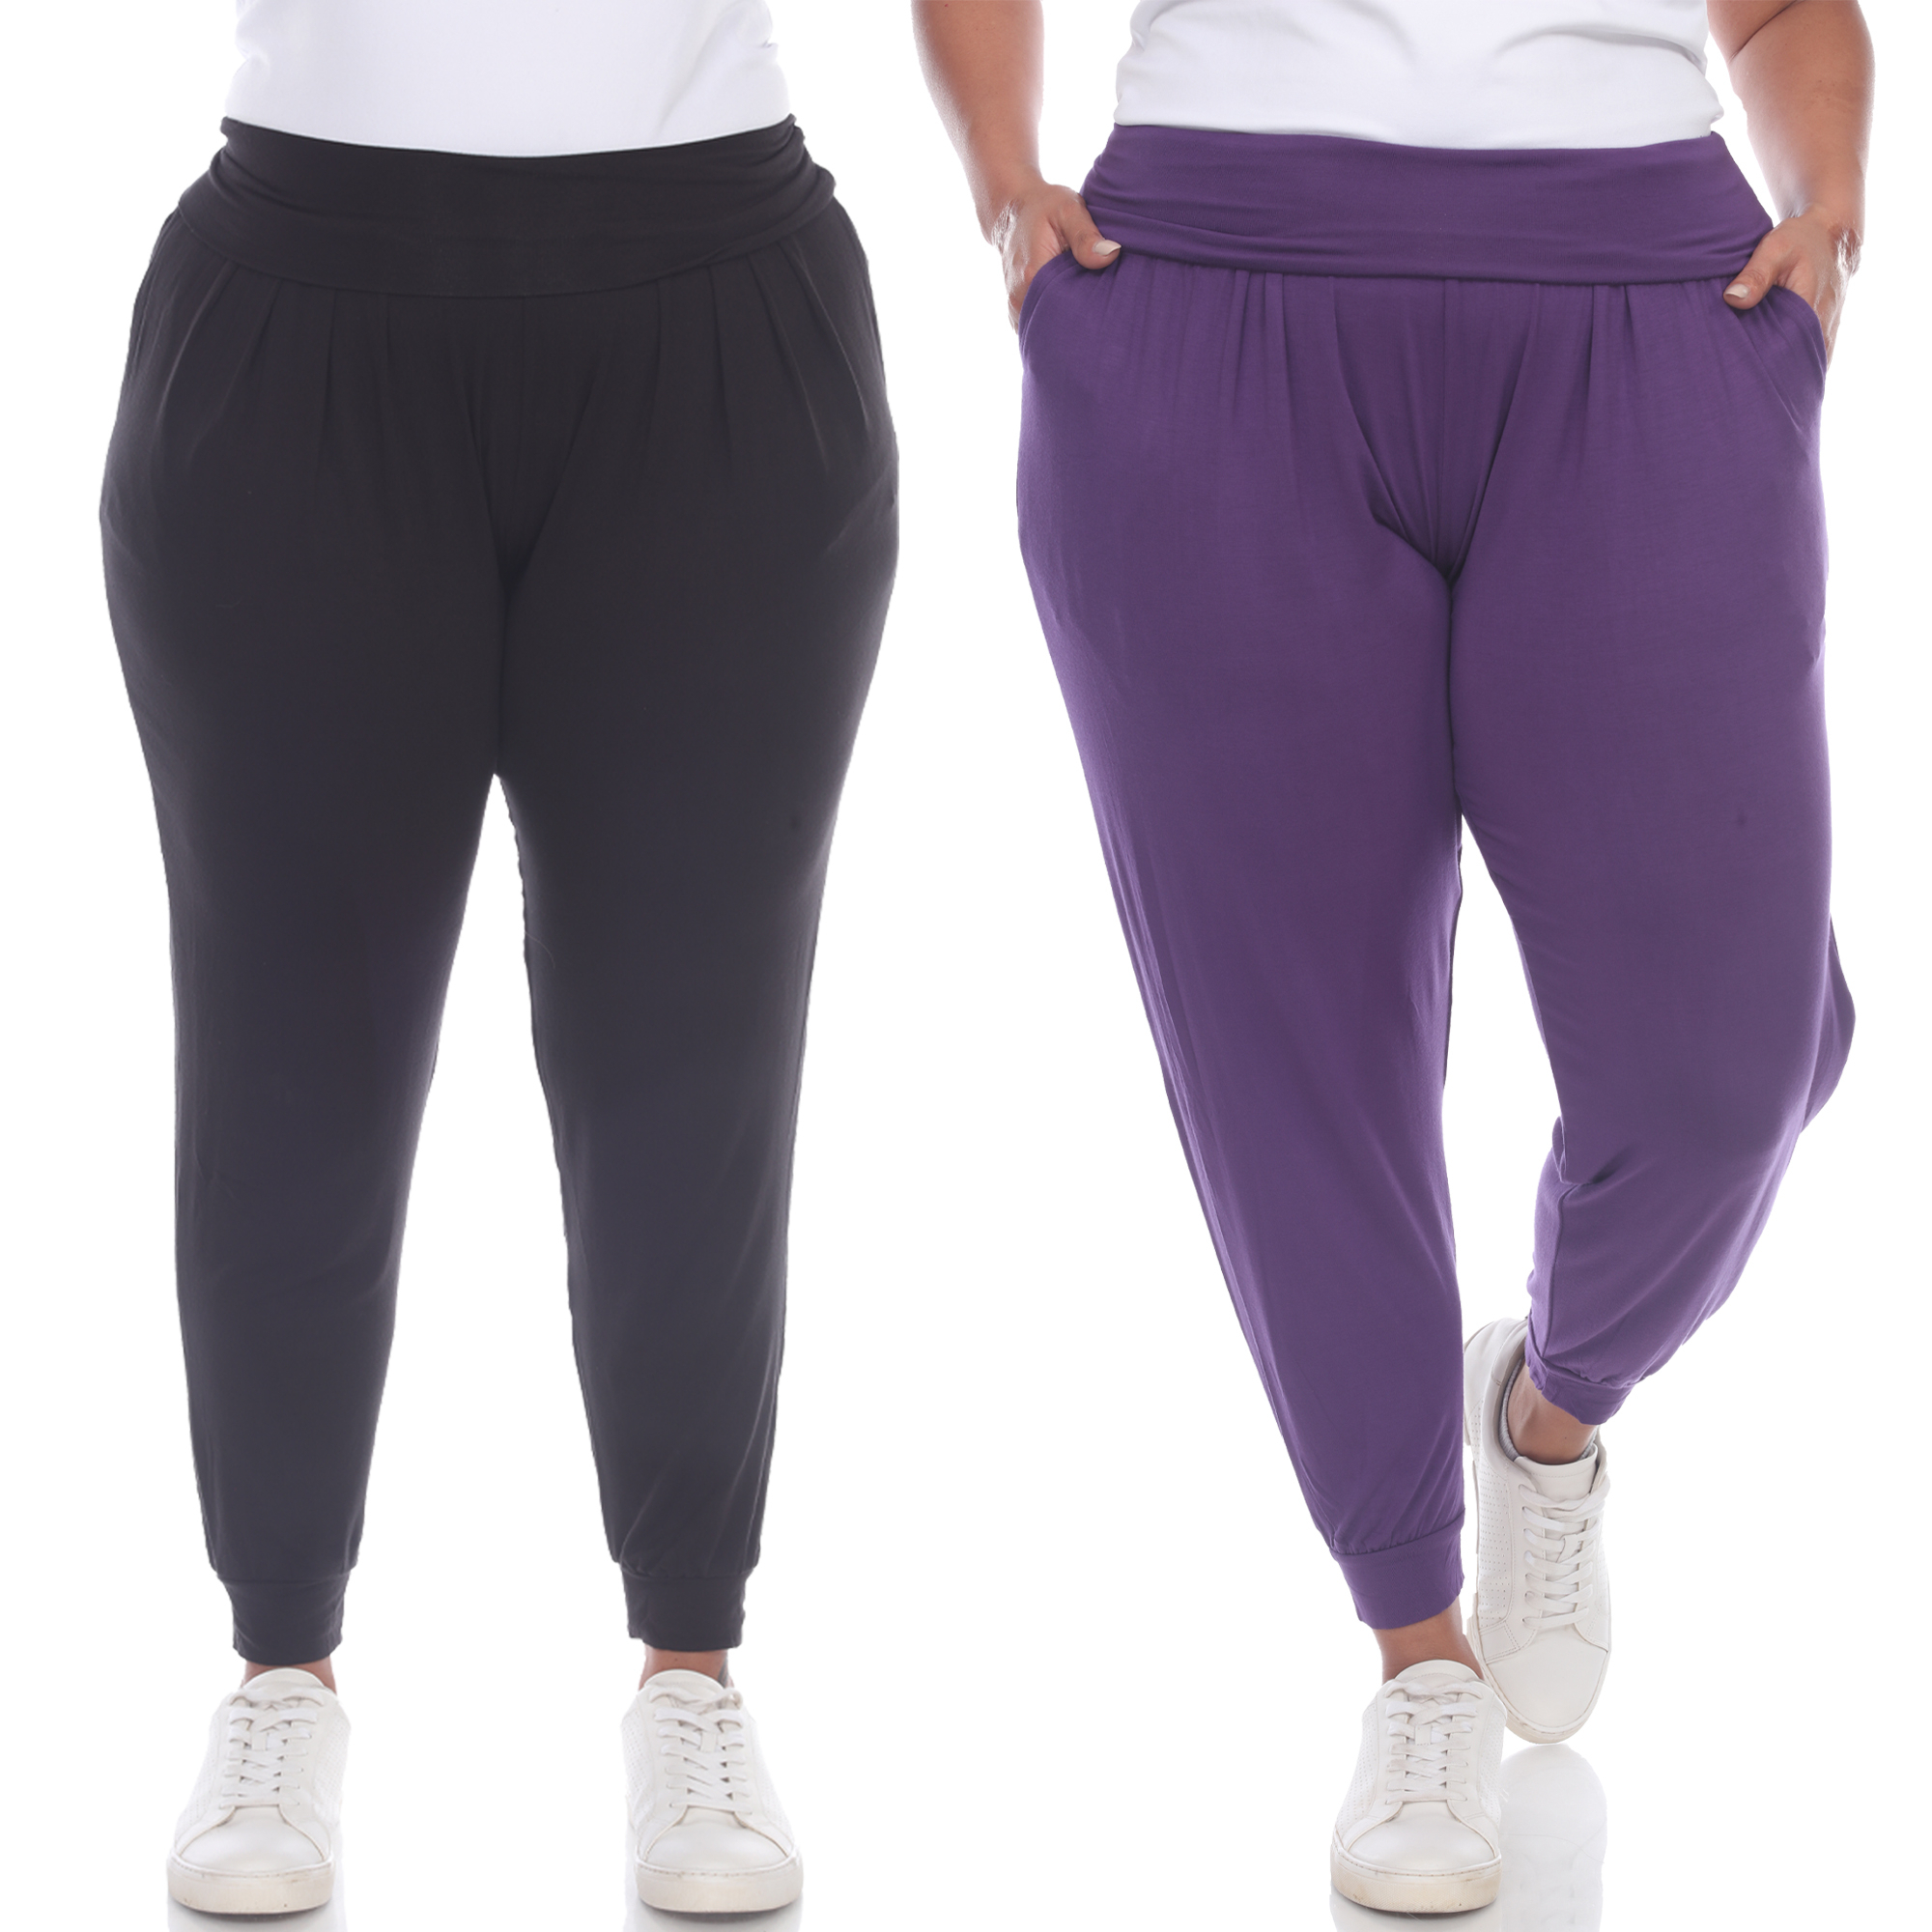 White Mark Women's 2-Pack High Waist Harem Pants - Black, Purple, 1X